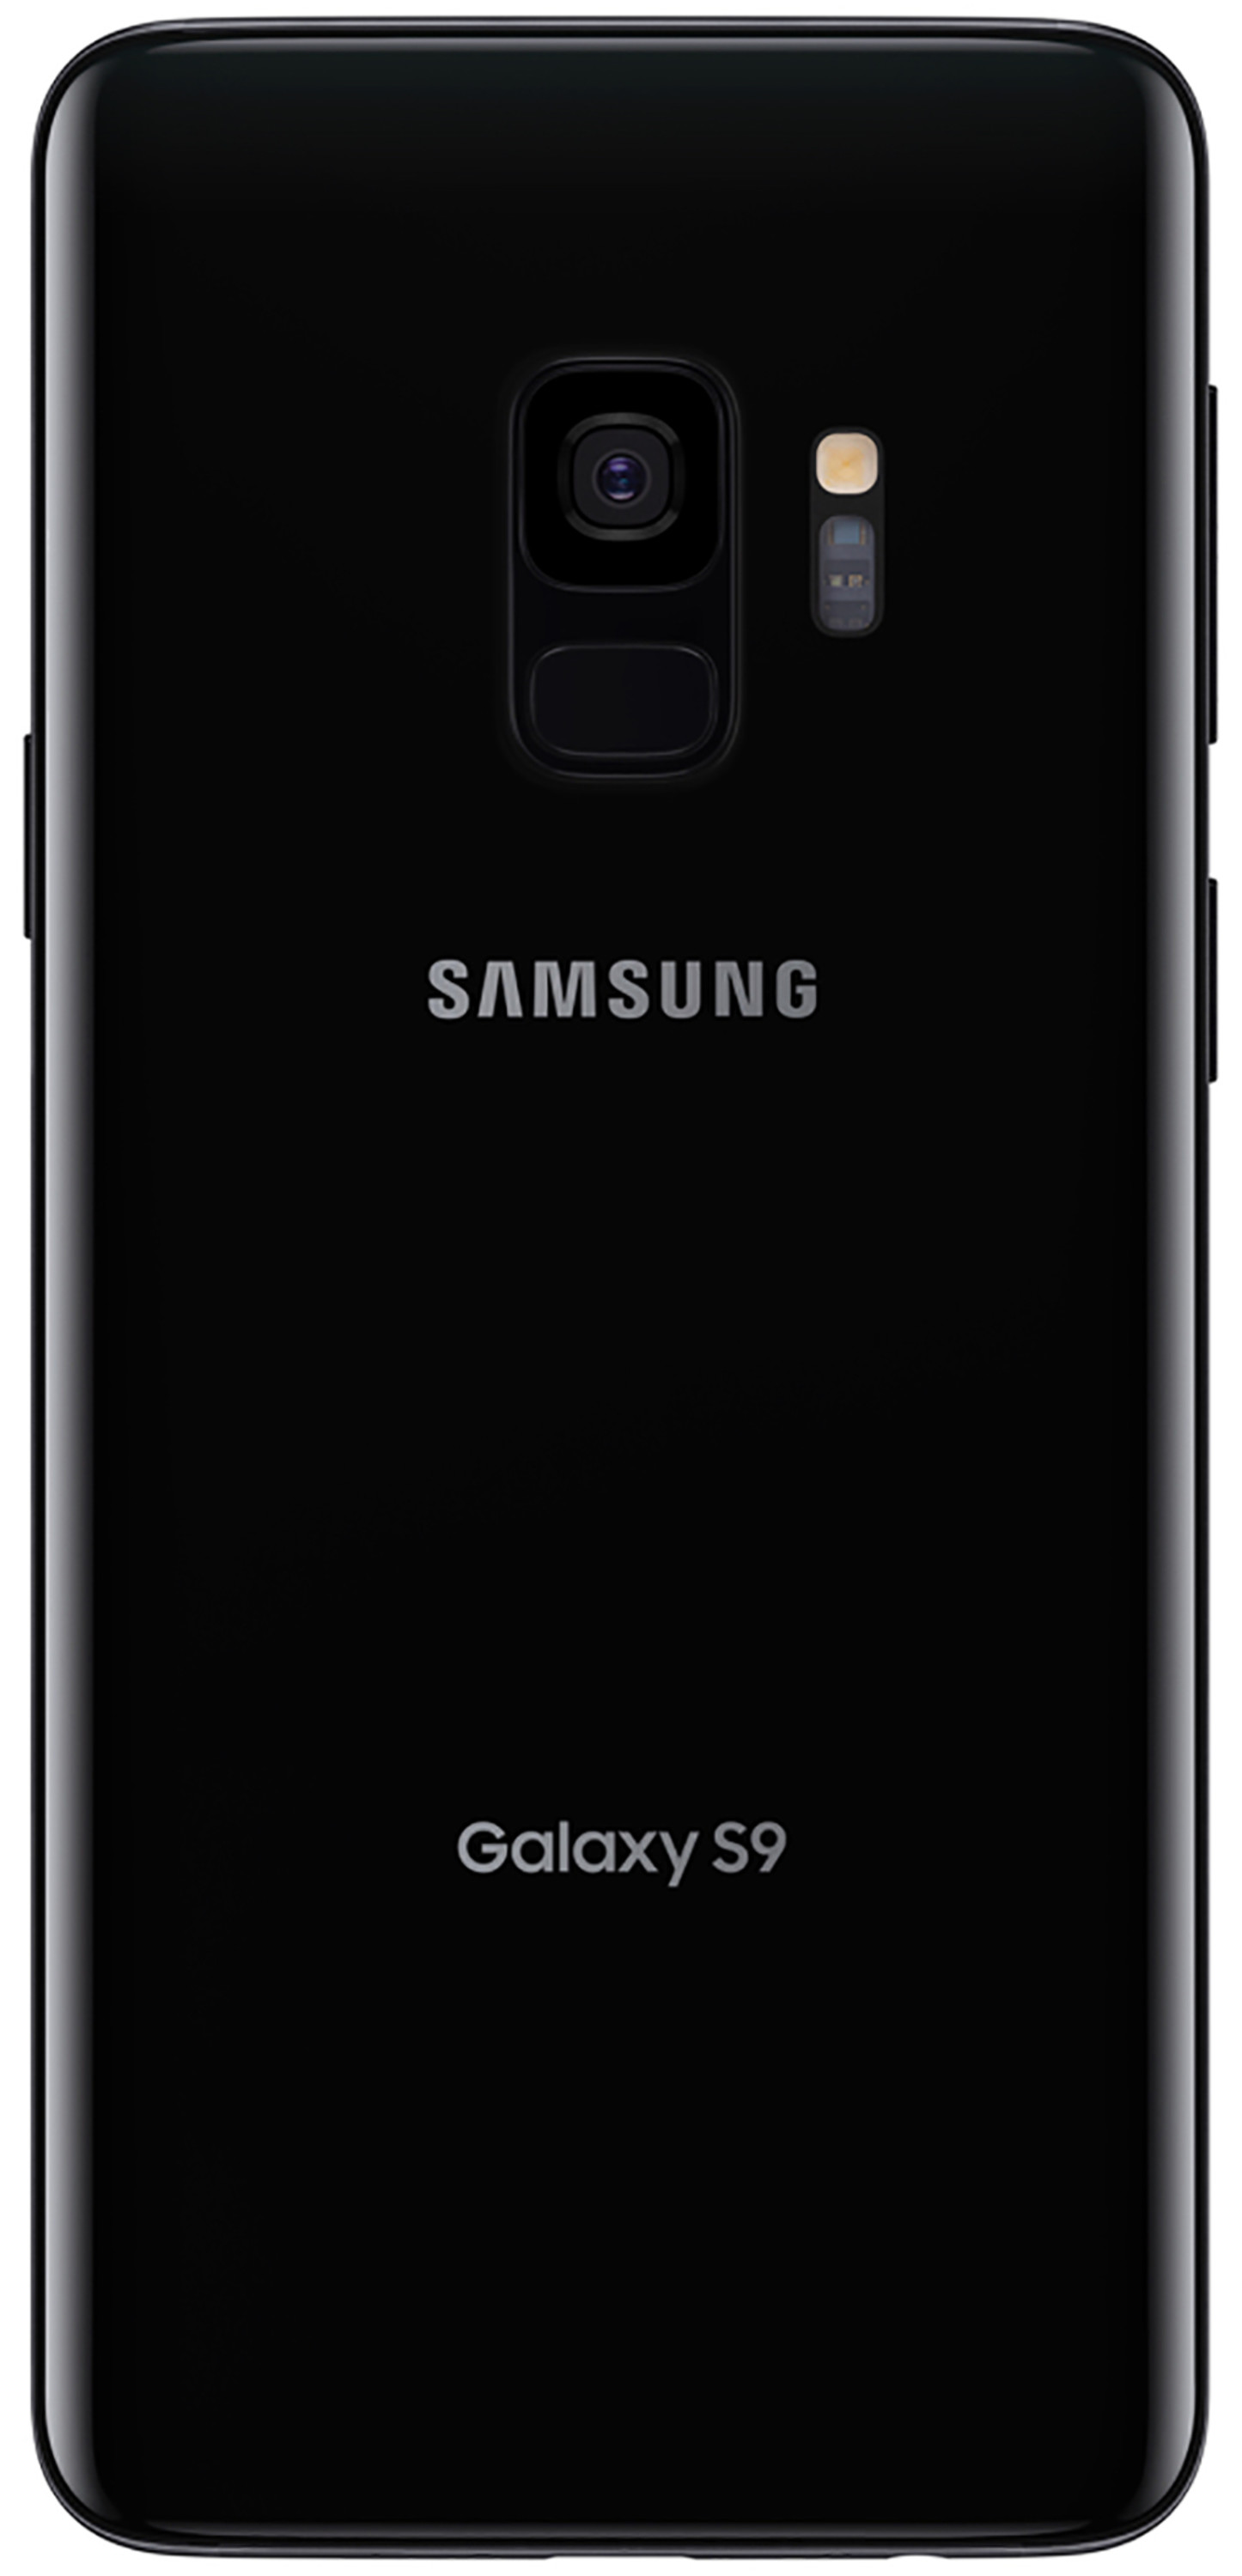 Restored SAMSUNG Galaxy S9 G960U 64GB Unlocked GSM/CDMA 4G LTE Phone with 12MP Camera (USA Version) - Midnight Black (Refurbished) - image 4 of 6